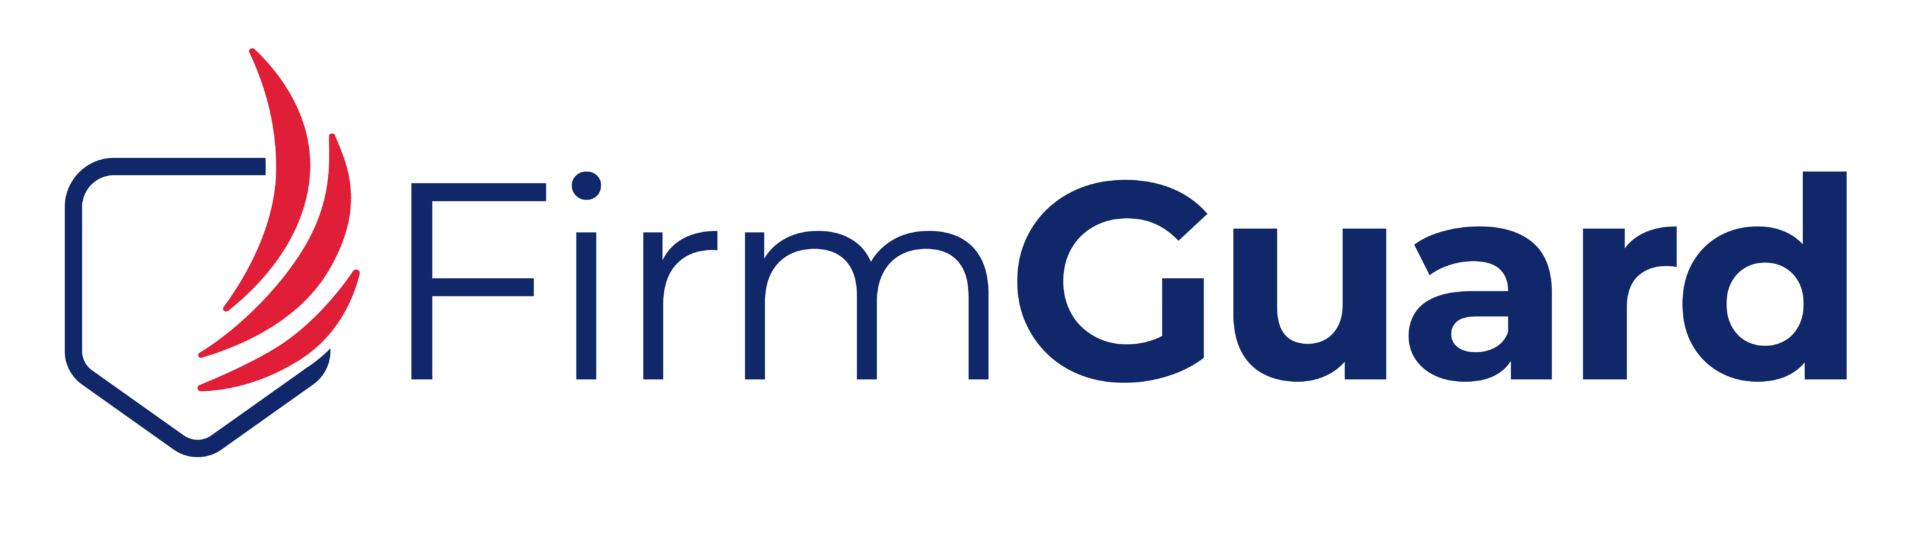 FirmGuard Logo Blue